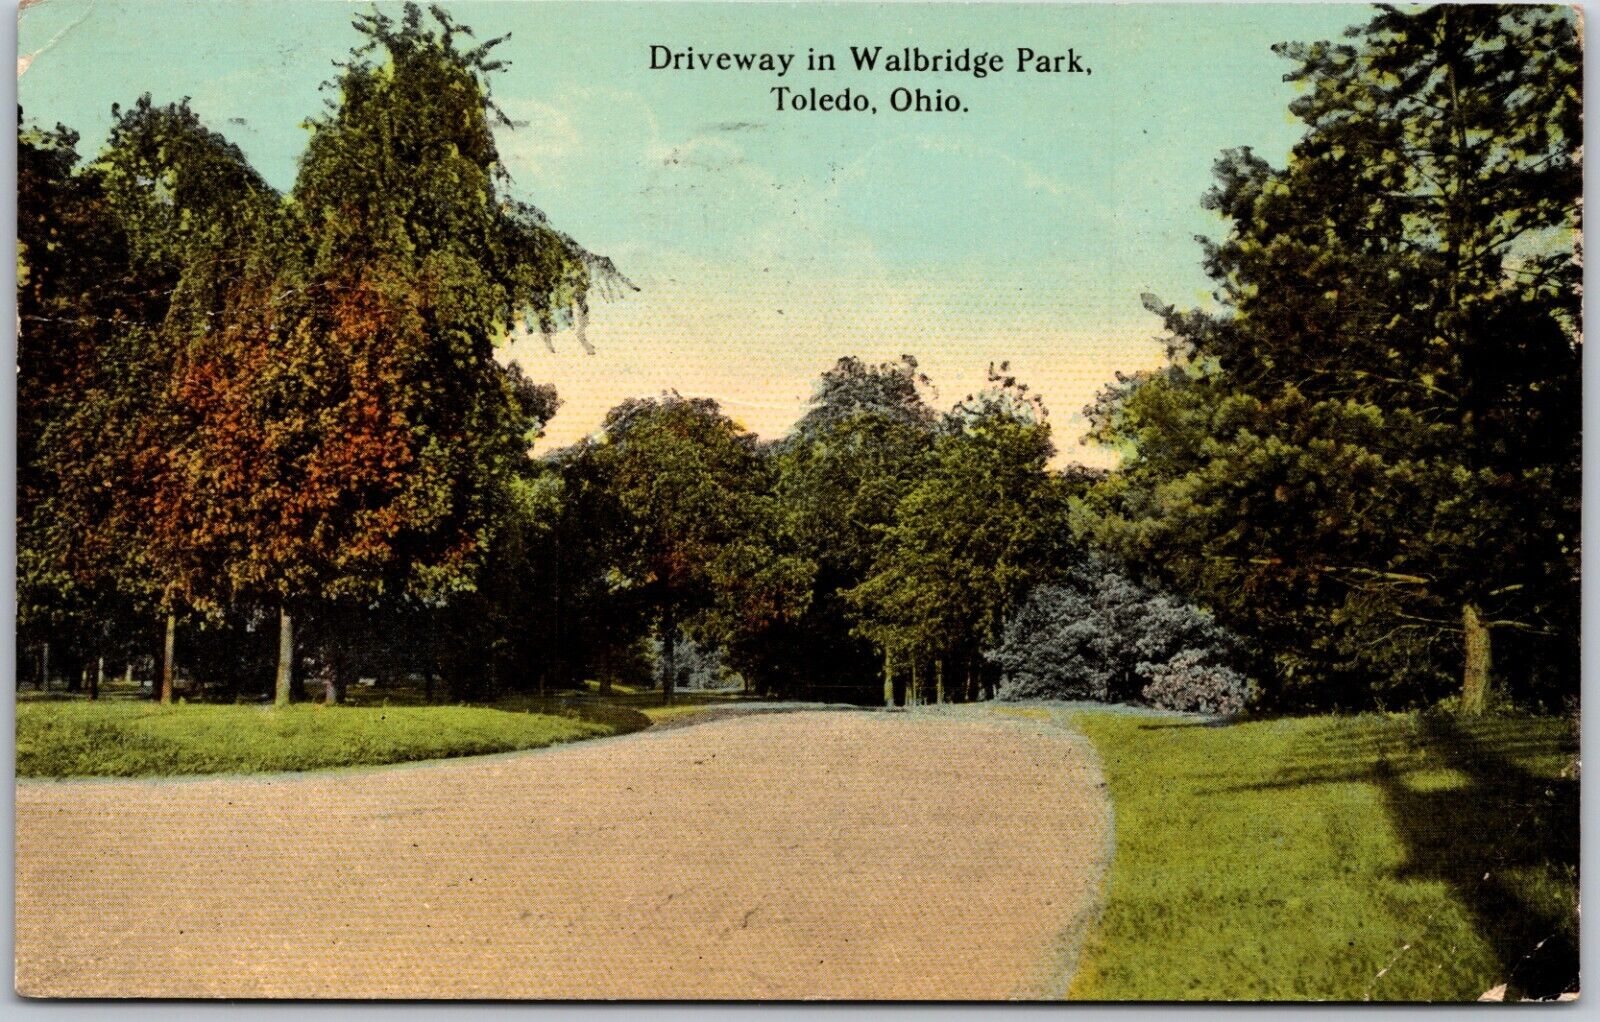 Driveway in Walbridge Park, Toledo, Ohio - Postcard